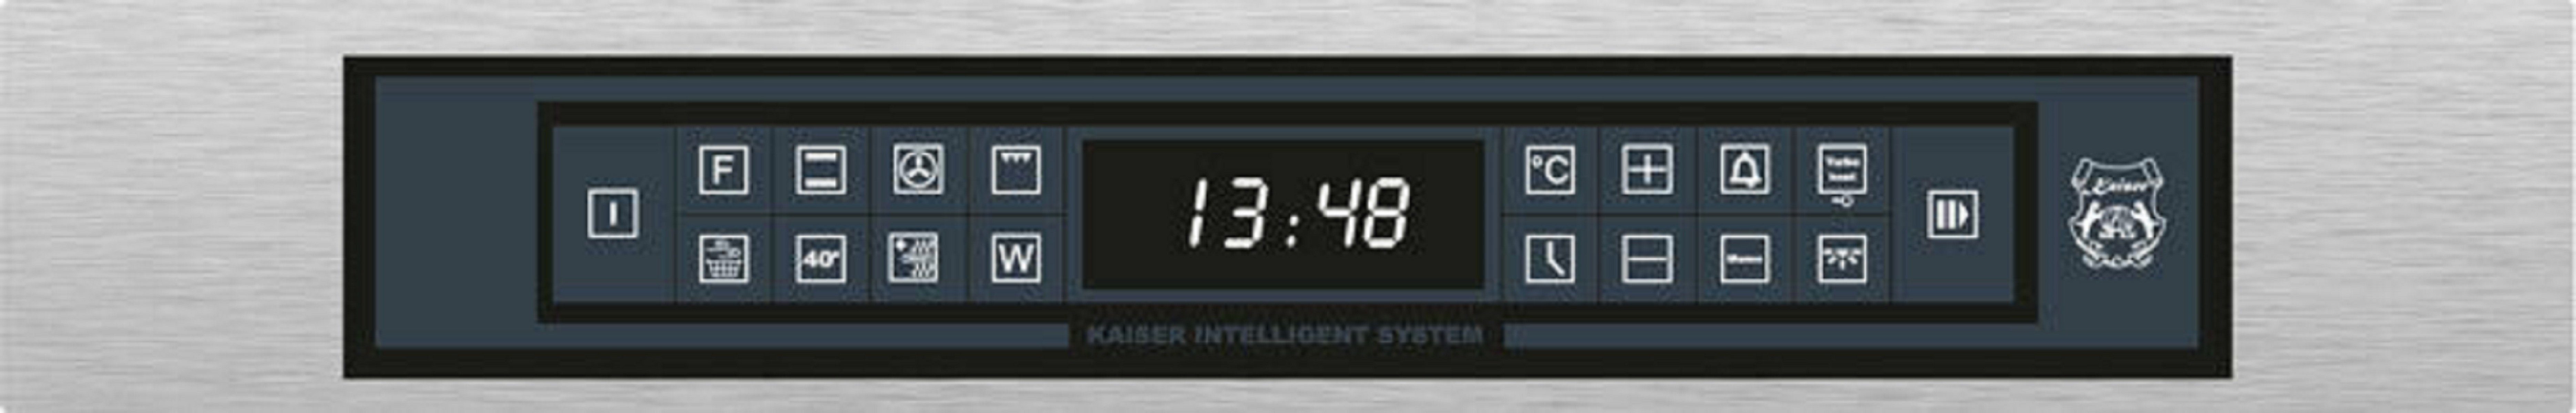 Kaiser Küchengeräte Elektro-Herd-Set EH 6385 + 6306 Glaskeramik KCT + Einbaubackofen,Edelstahl,79L Fkt. Kochfeld R 15 EM, 60cm